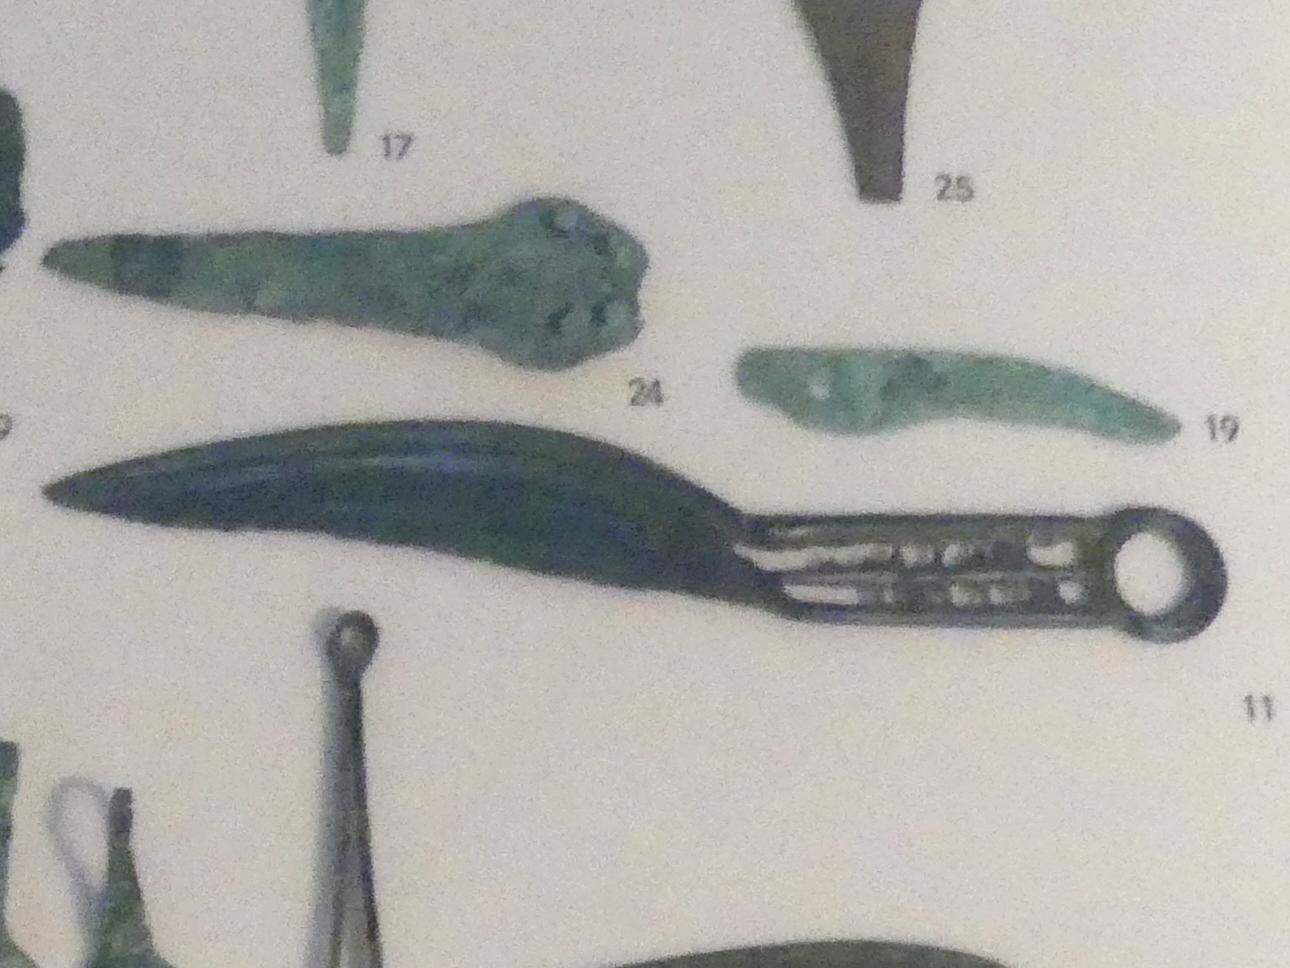 Messer mit Ringgriff, Bronzezeit, 3365 - 700 v. Chr., 1500 - 1200 v. Chr., Bild 1/2